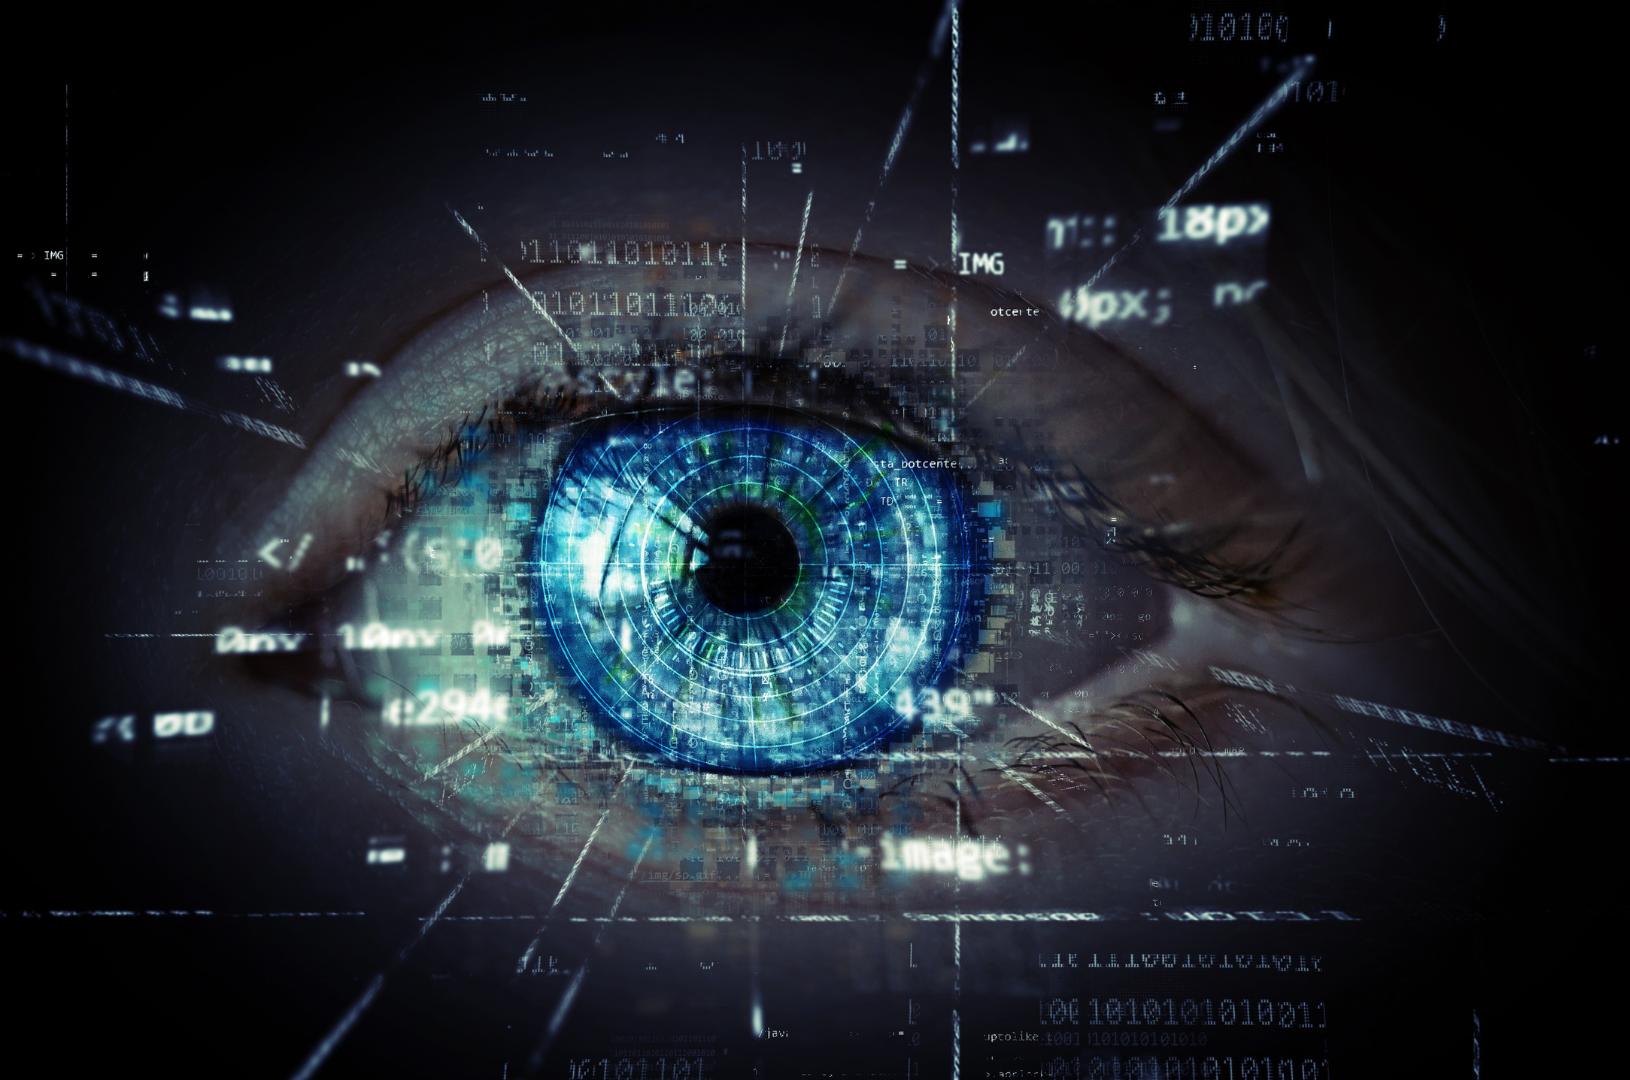 Human Eye FPS vs AI: Why AI is Better